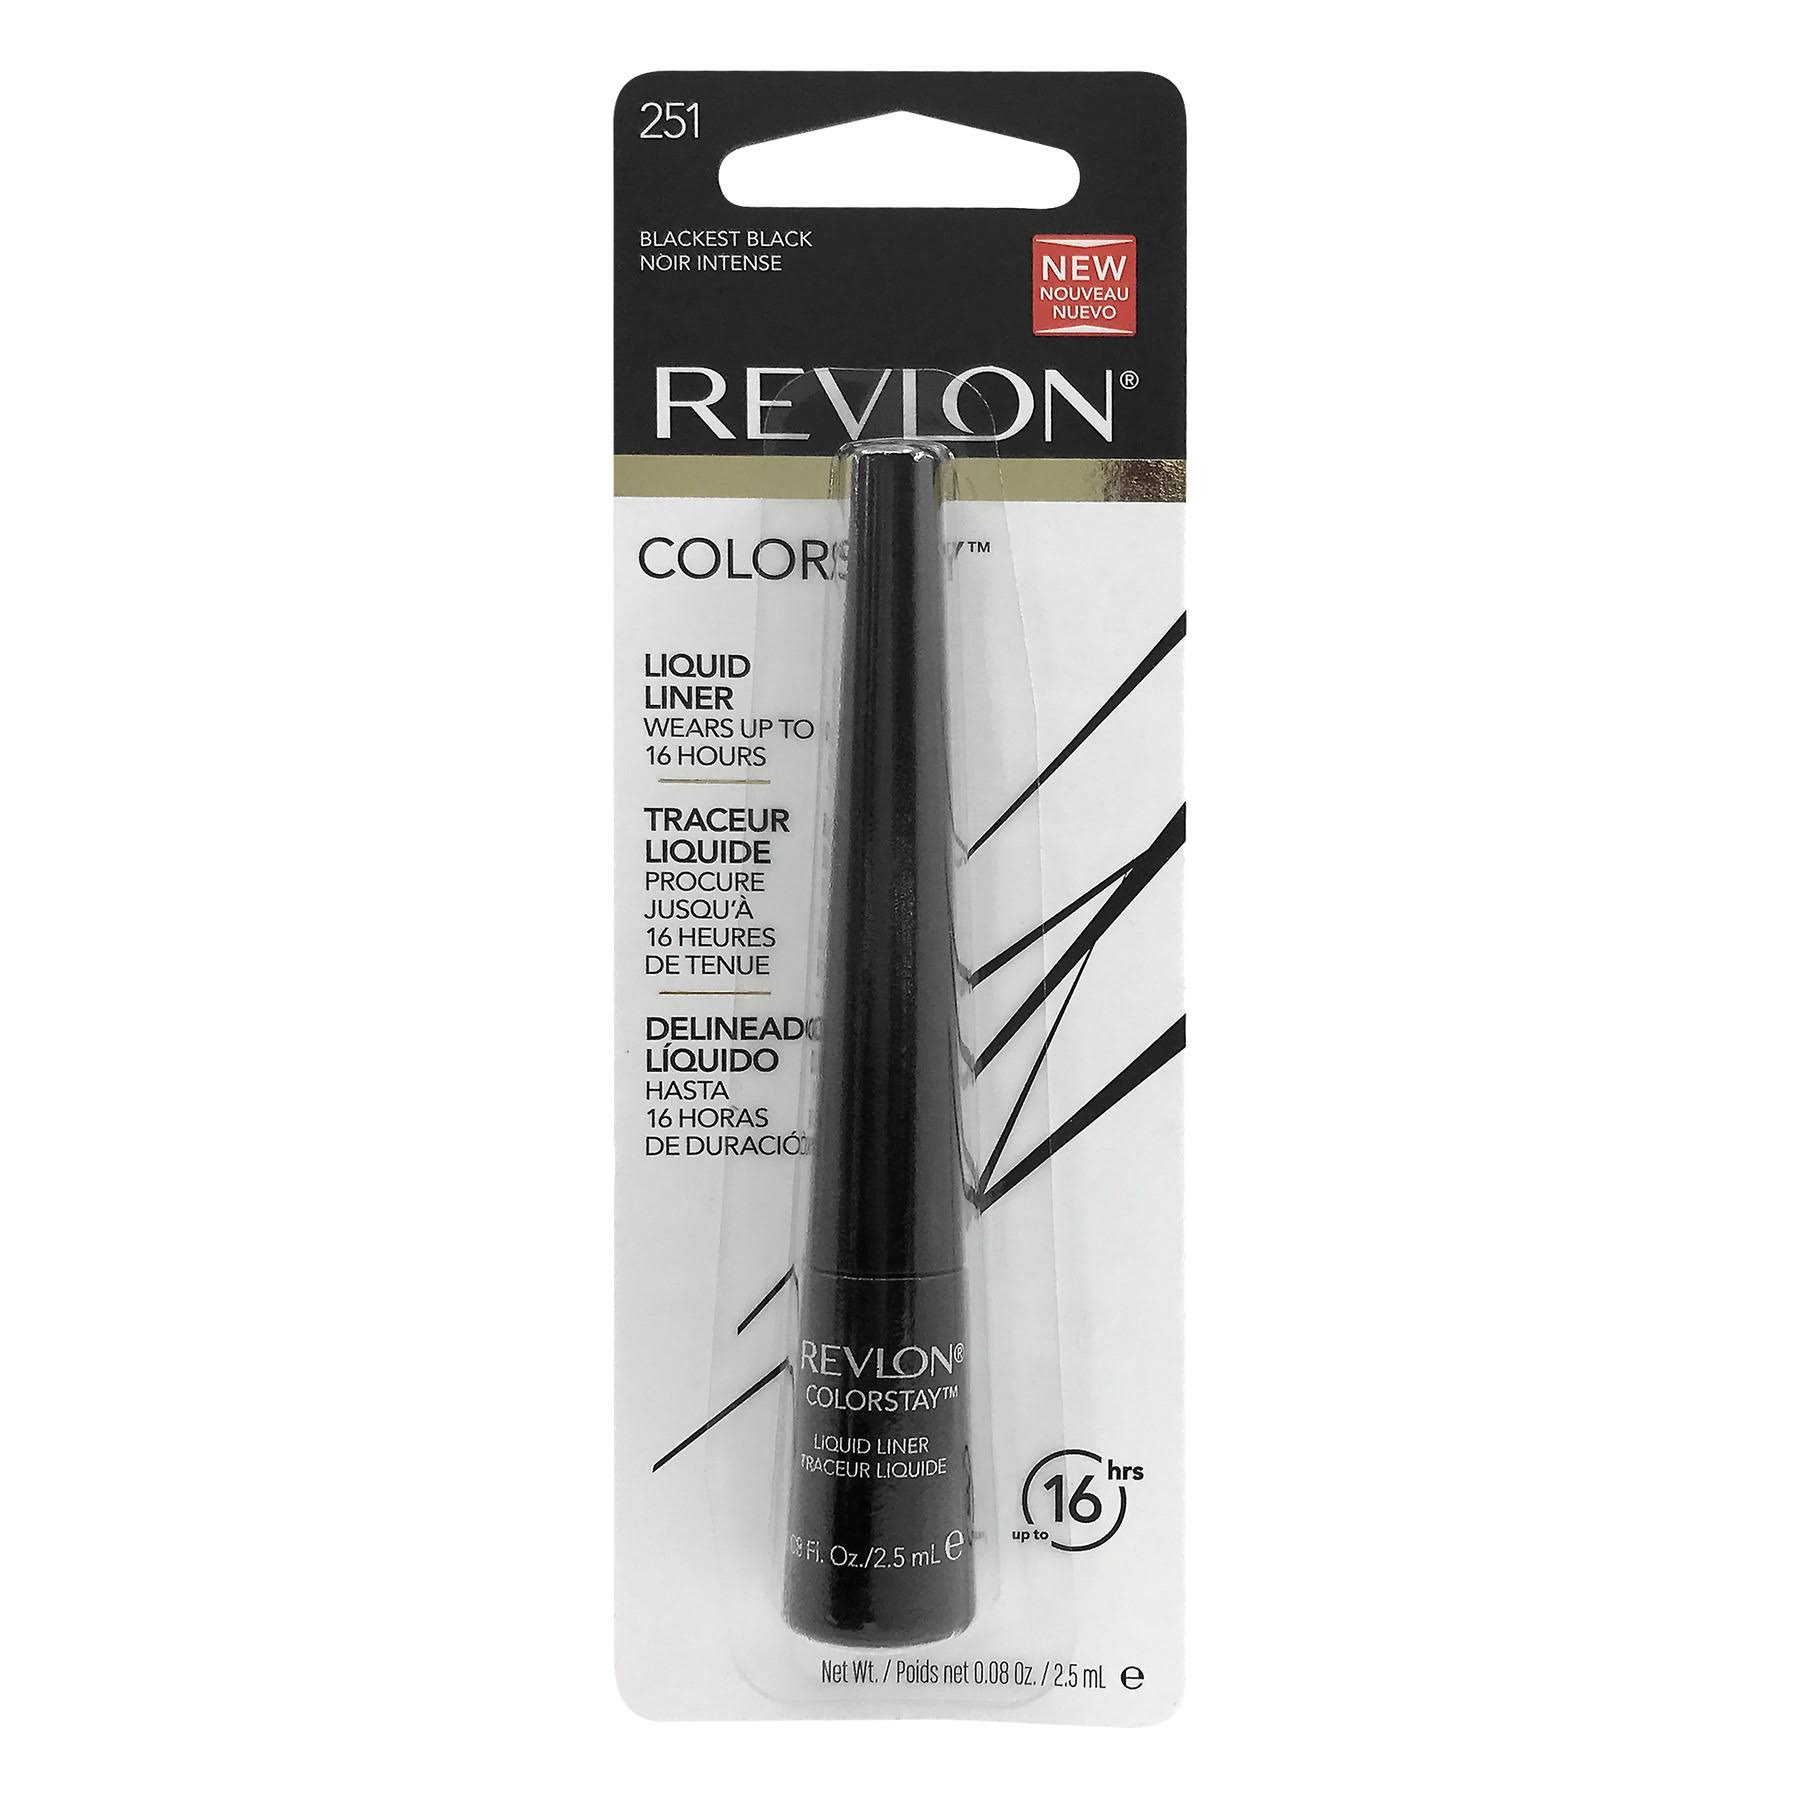 Revlon Colorstay Liquid Eyeliner - Black, 0.08oz